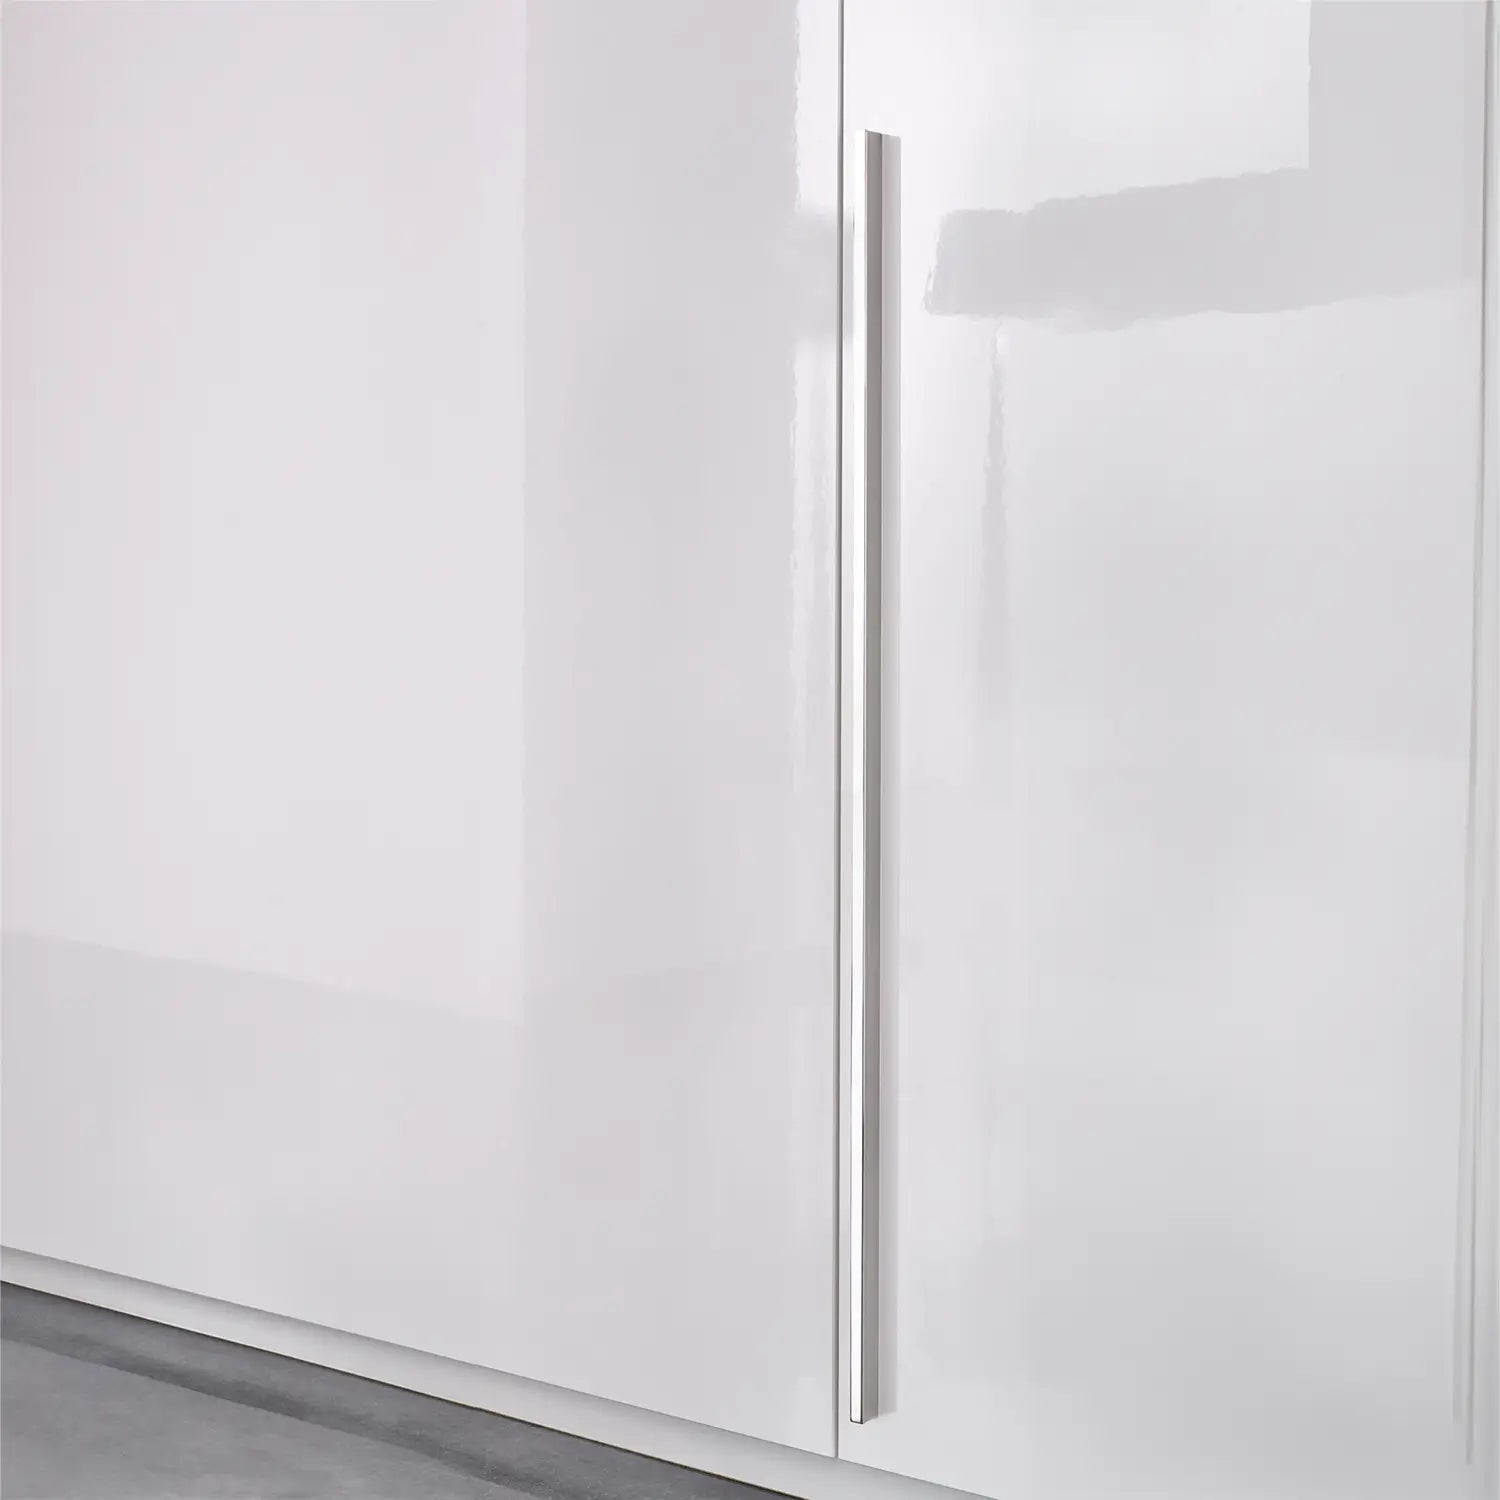 Rauch Montclar White High Gloss 4 Door Wardrobe with Drawers